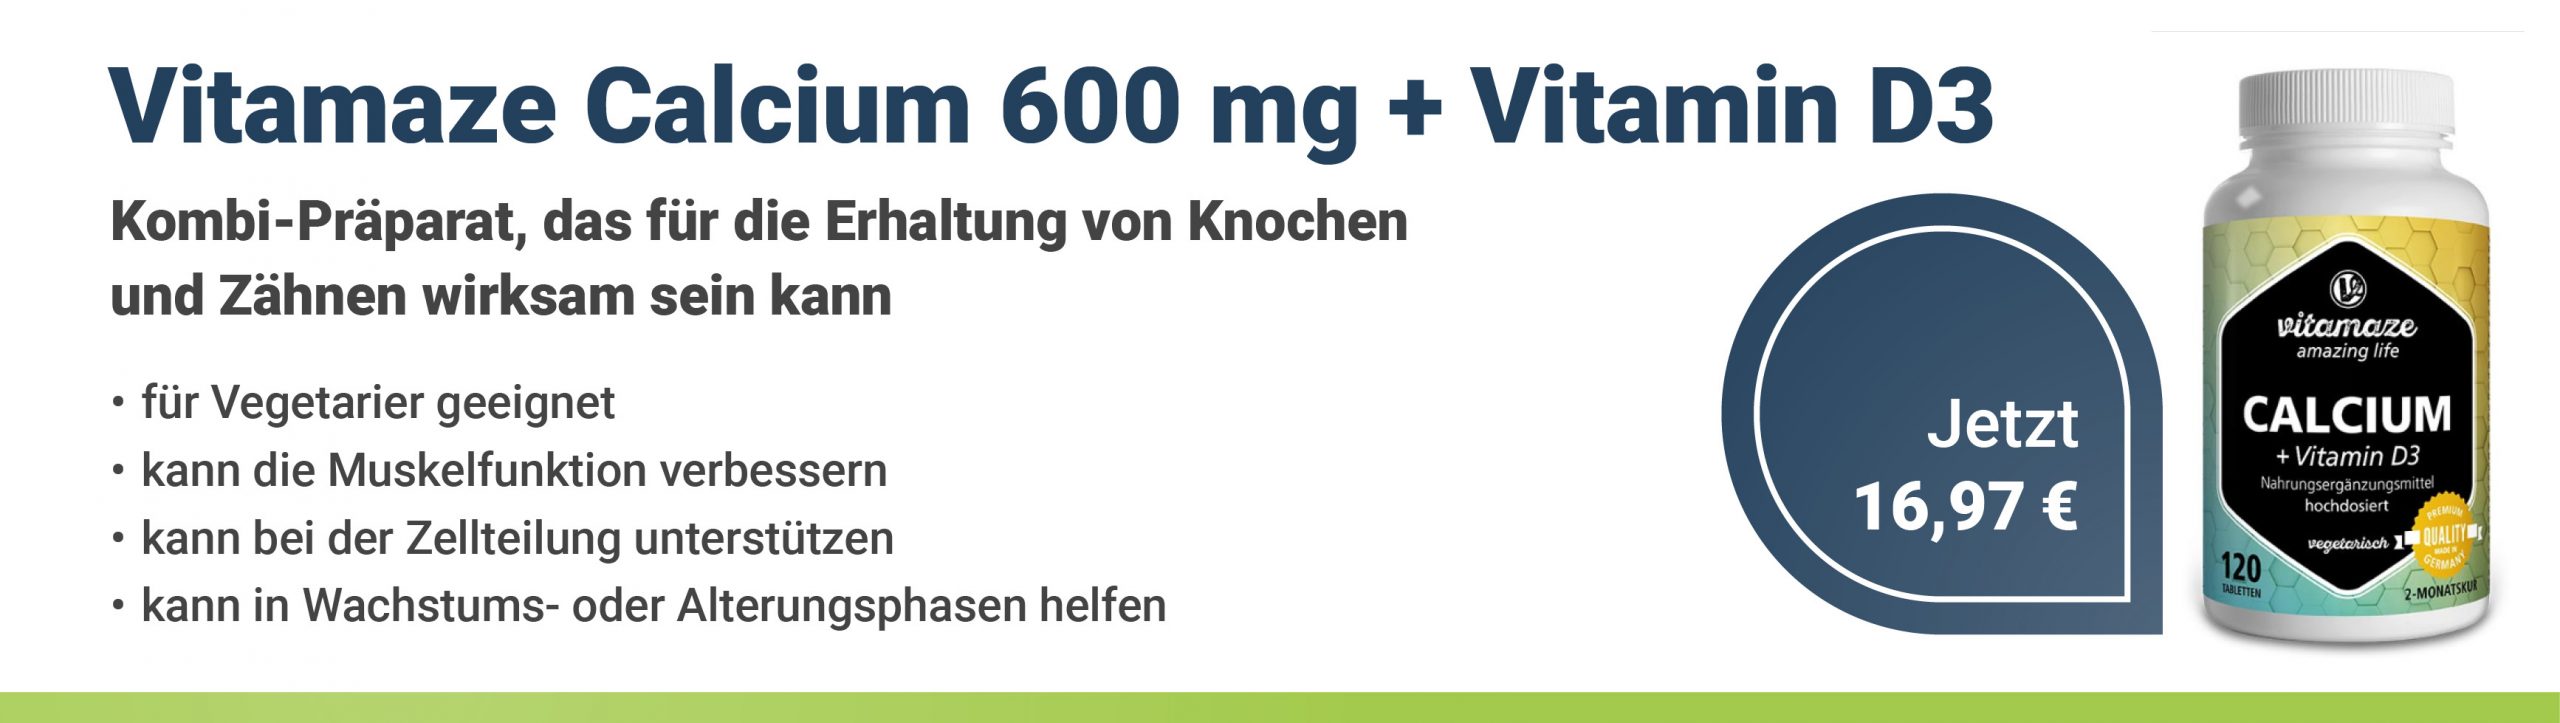 https://www.health-rise.de/wp-content/uploads/2021/10/Vitamaze-GmbH-Calcium-600-mg-Vitamin-D32.jpg